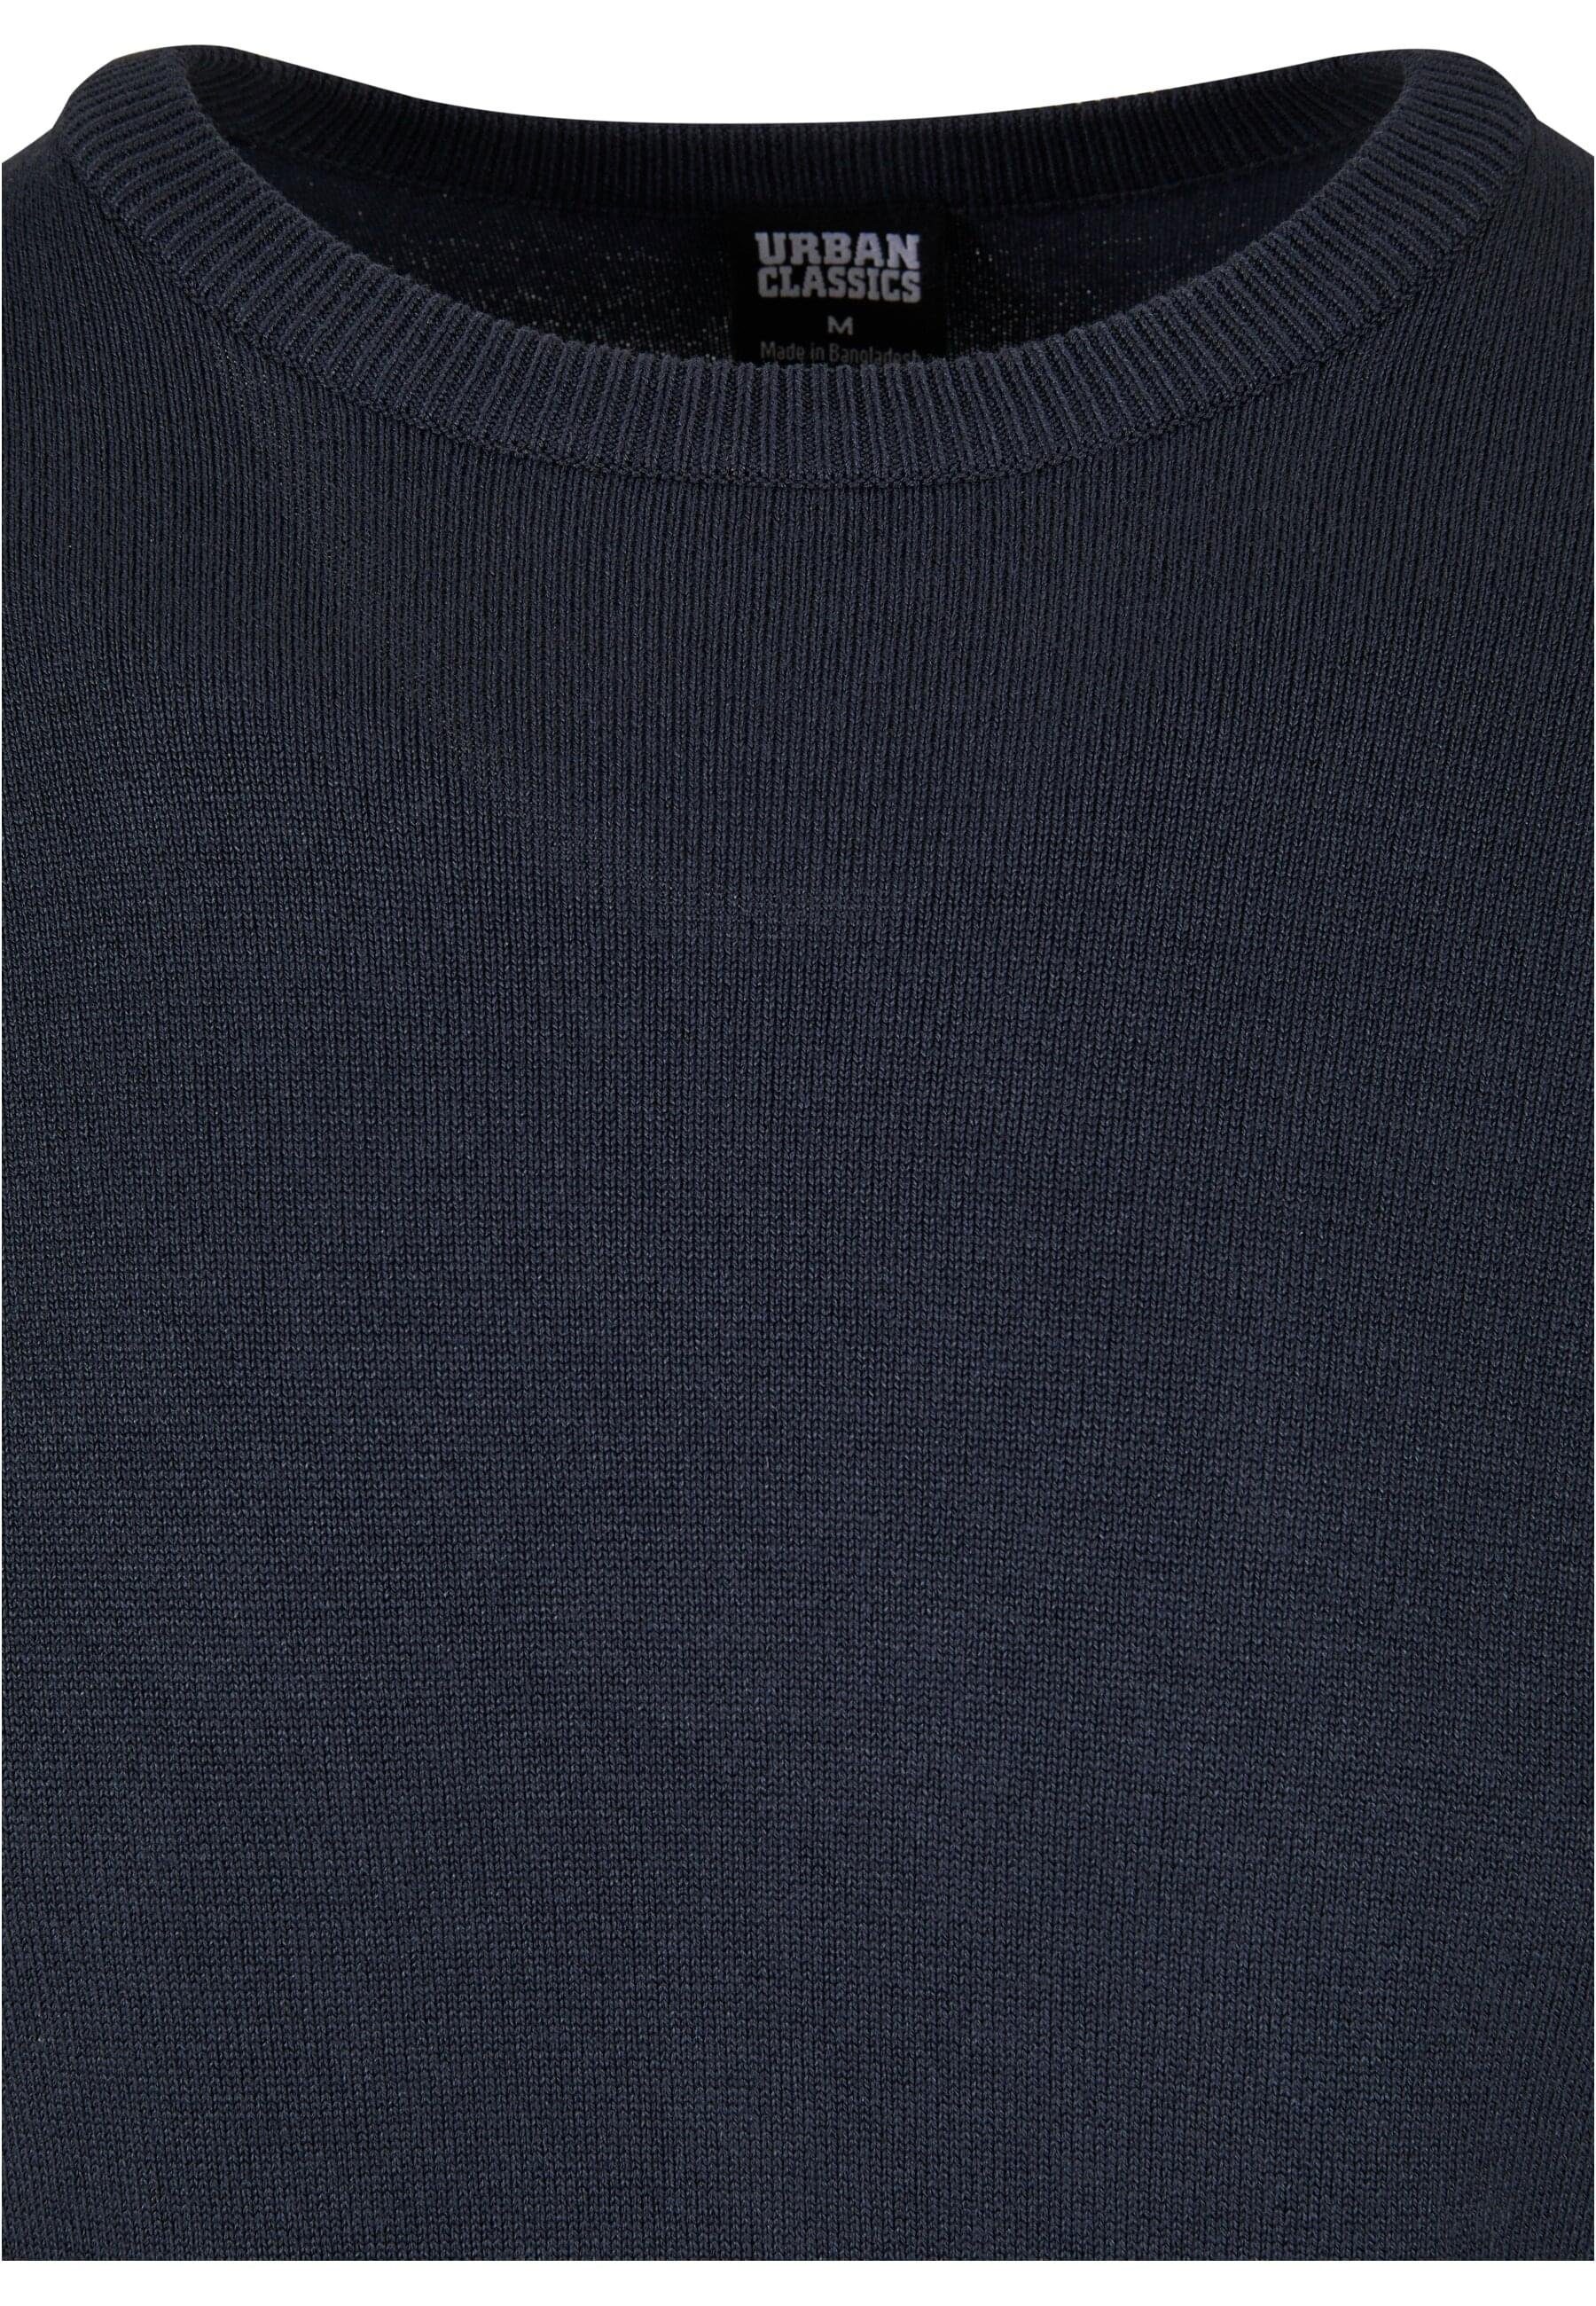 Herren Crewneck Knitted Sweater Rundhalspullover CLASSICS URBAN navy